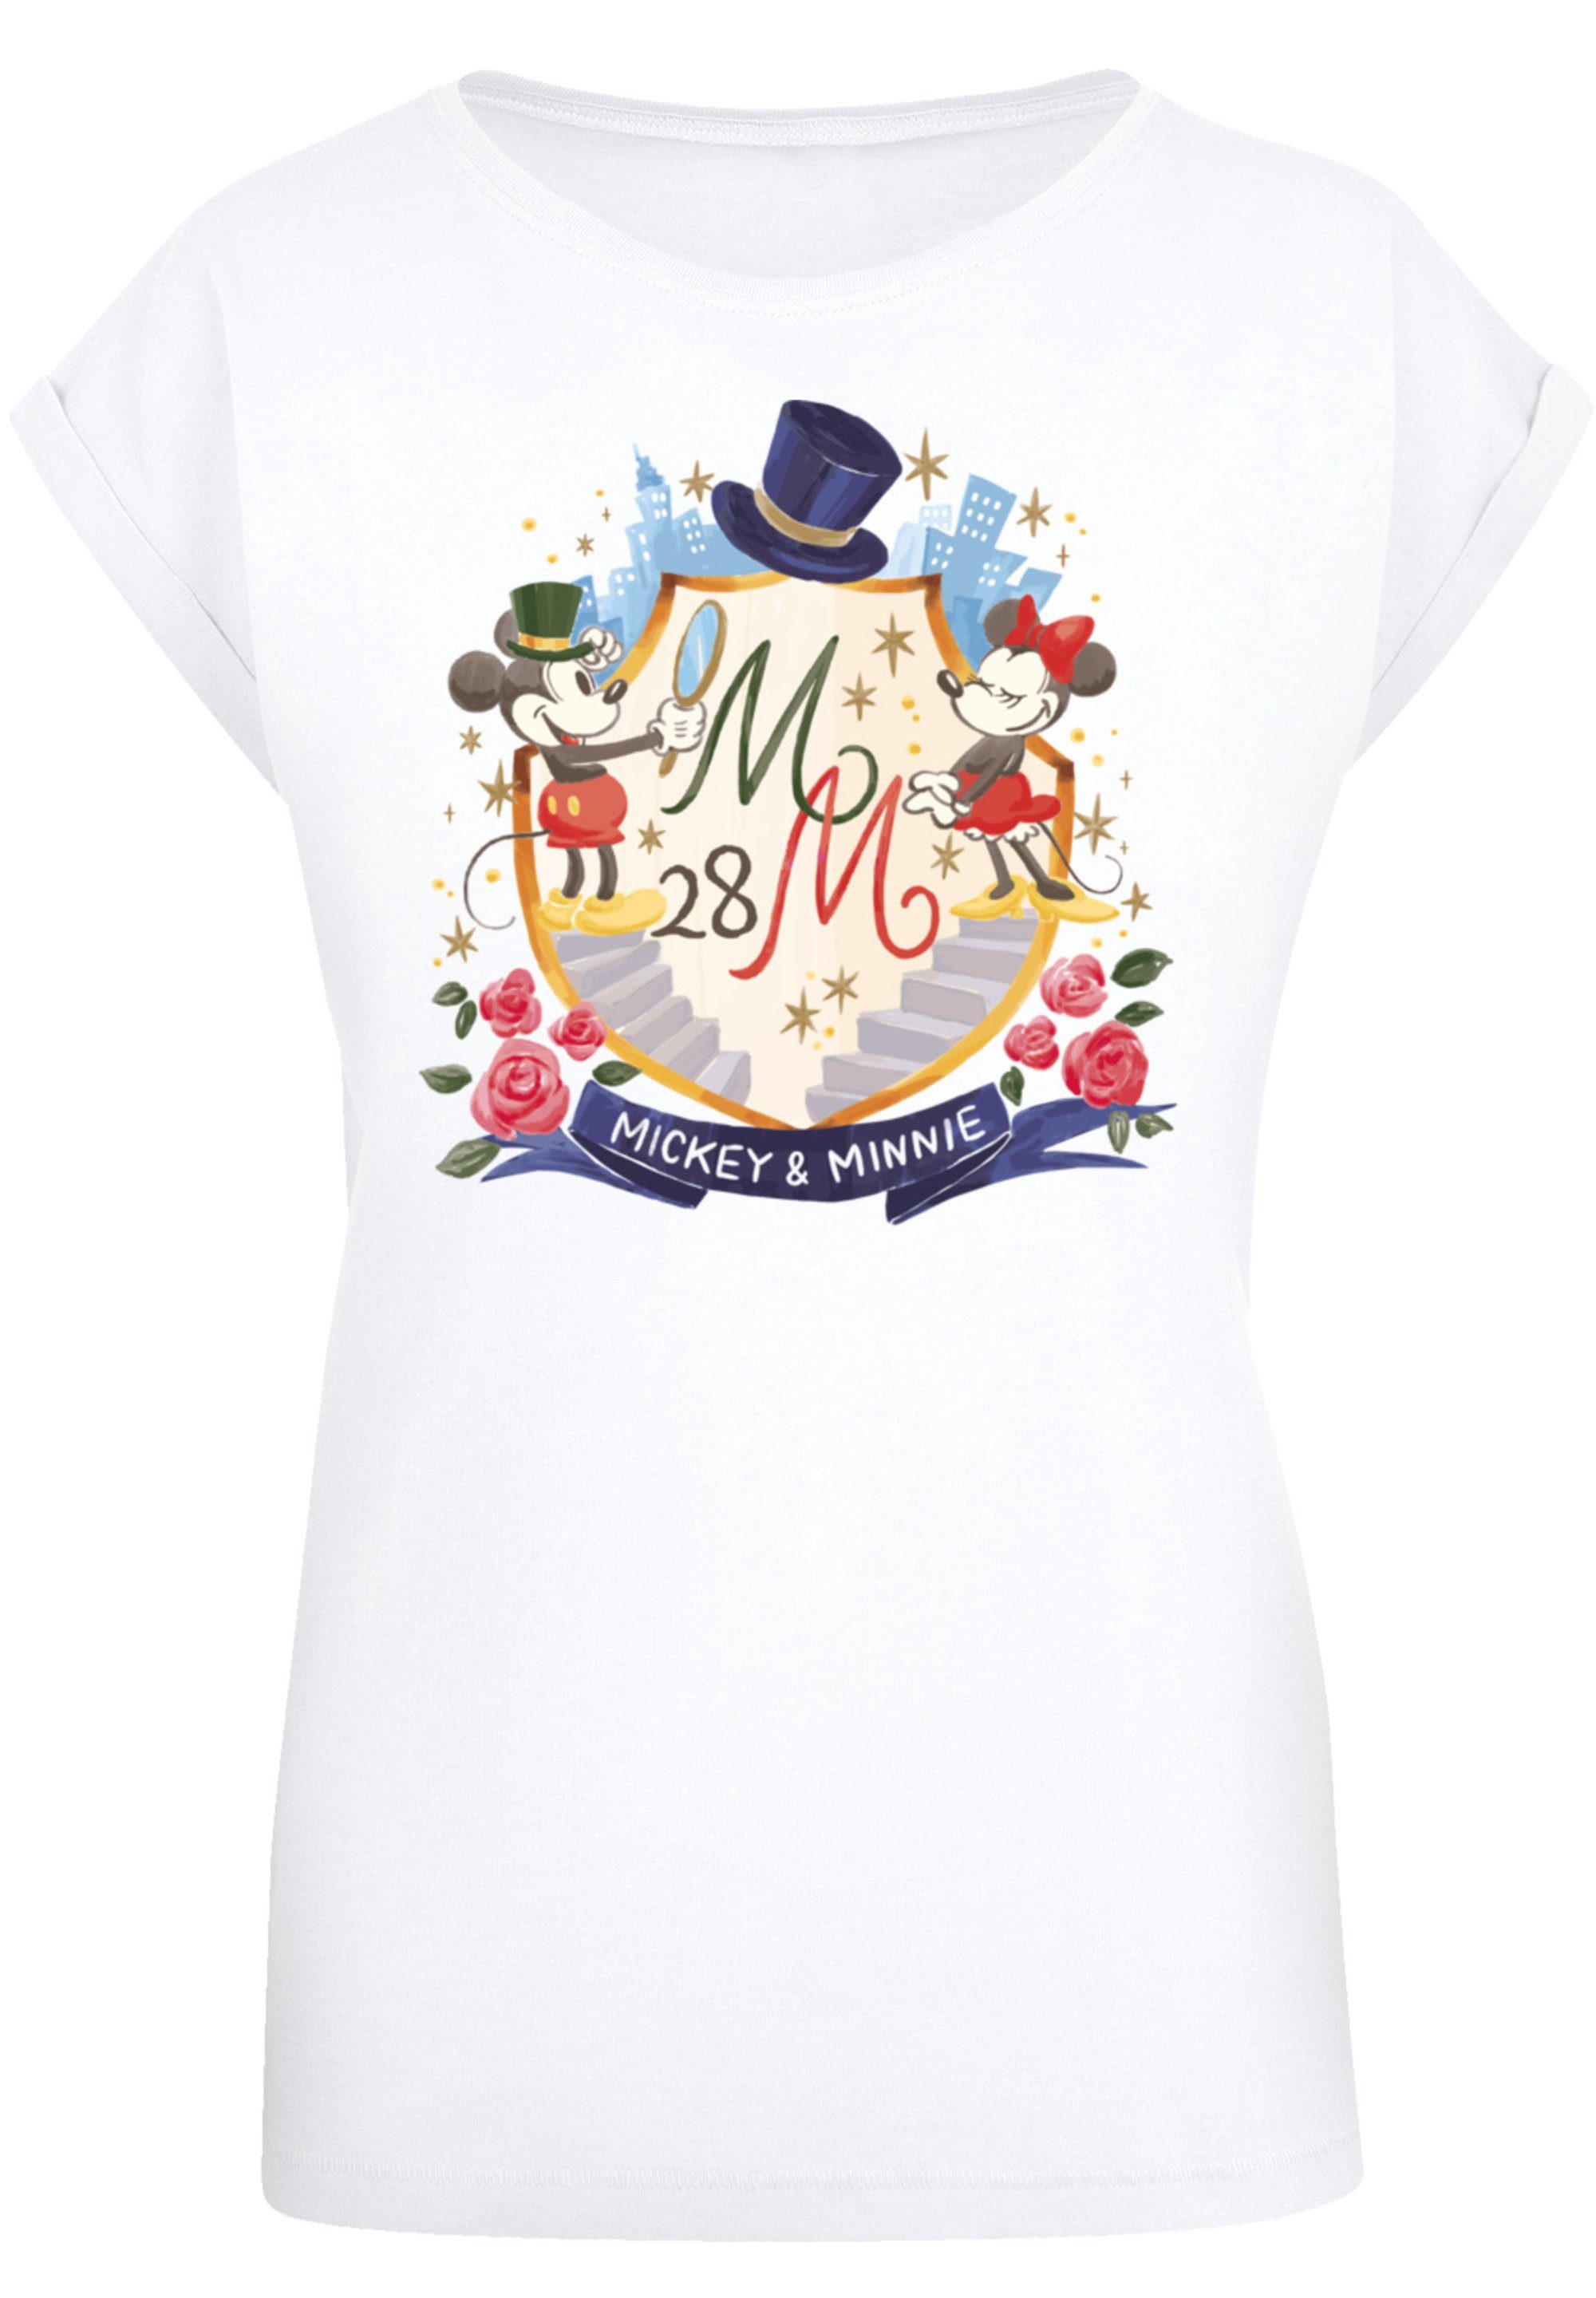 F4NT4STIC T-Shirt Disney Micky & Minnie Maus 28 Premium Qualität